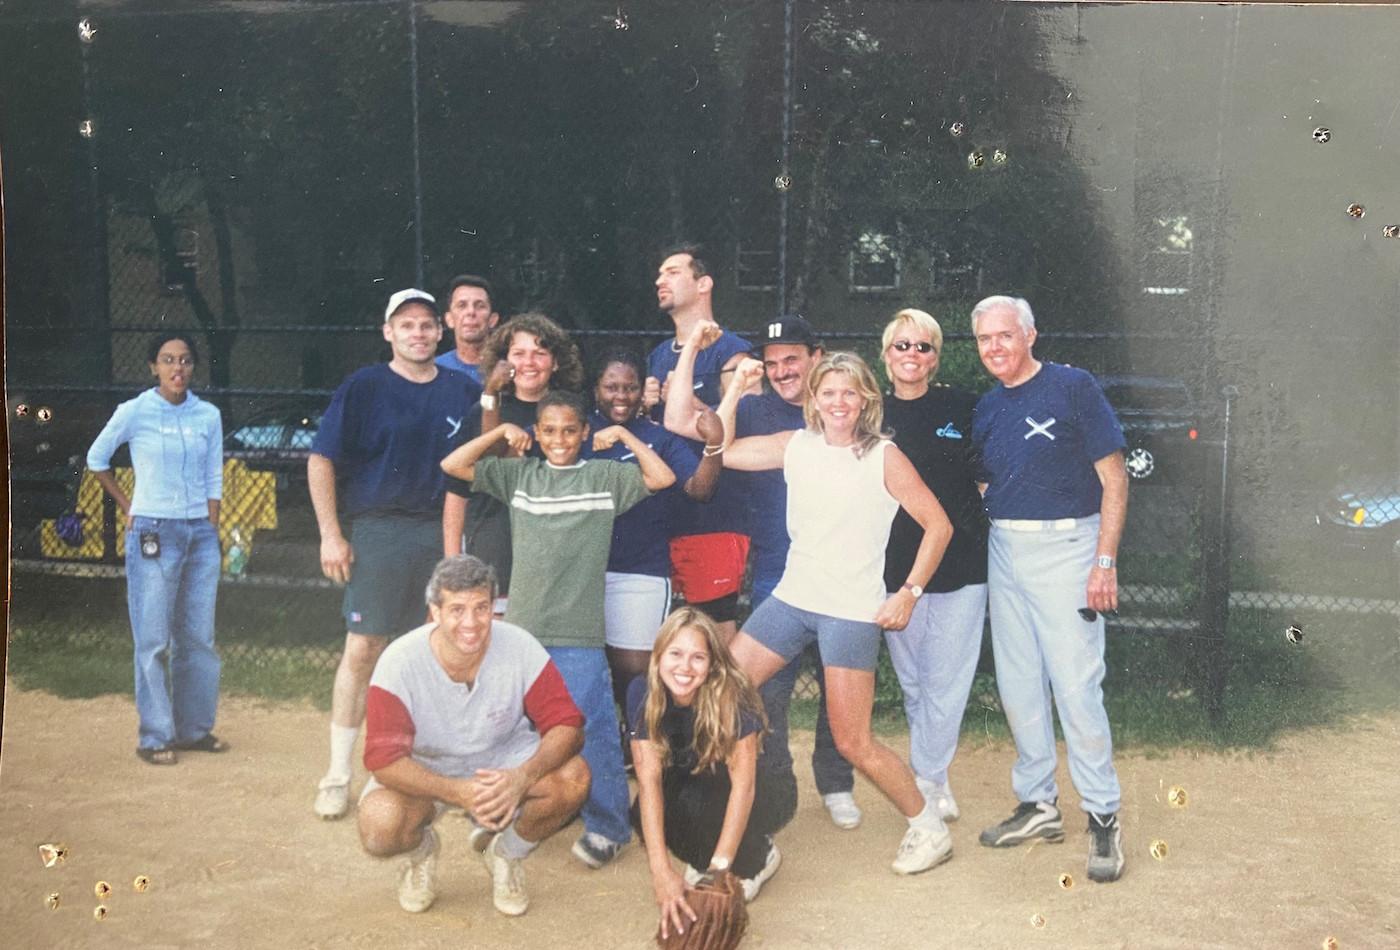 WTTW's Softball team, including Don Muss